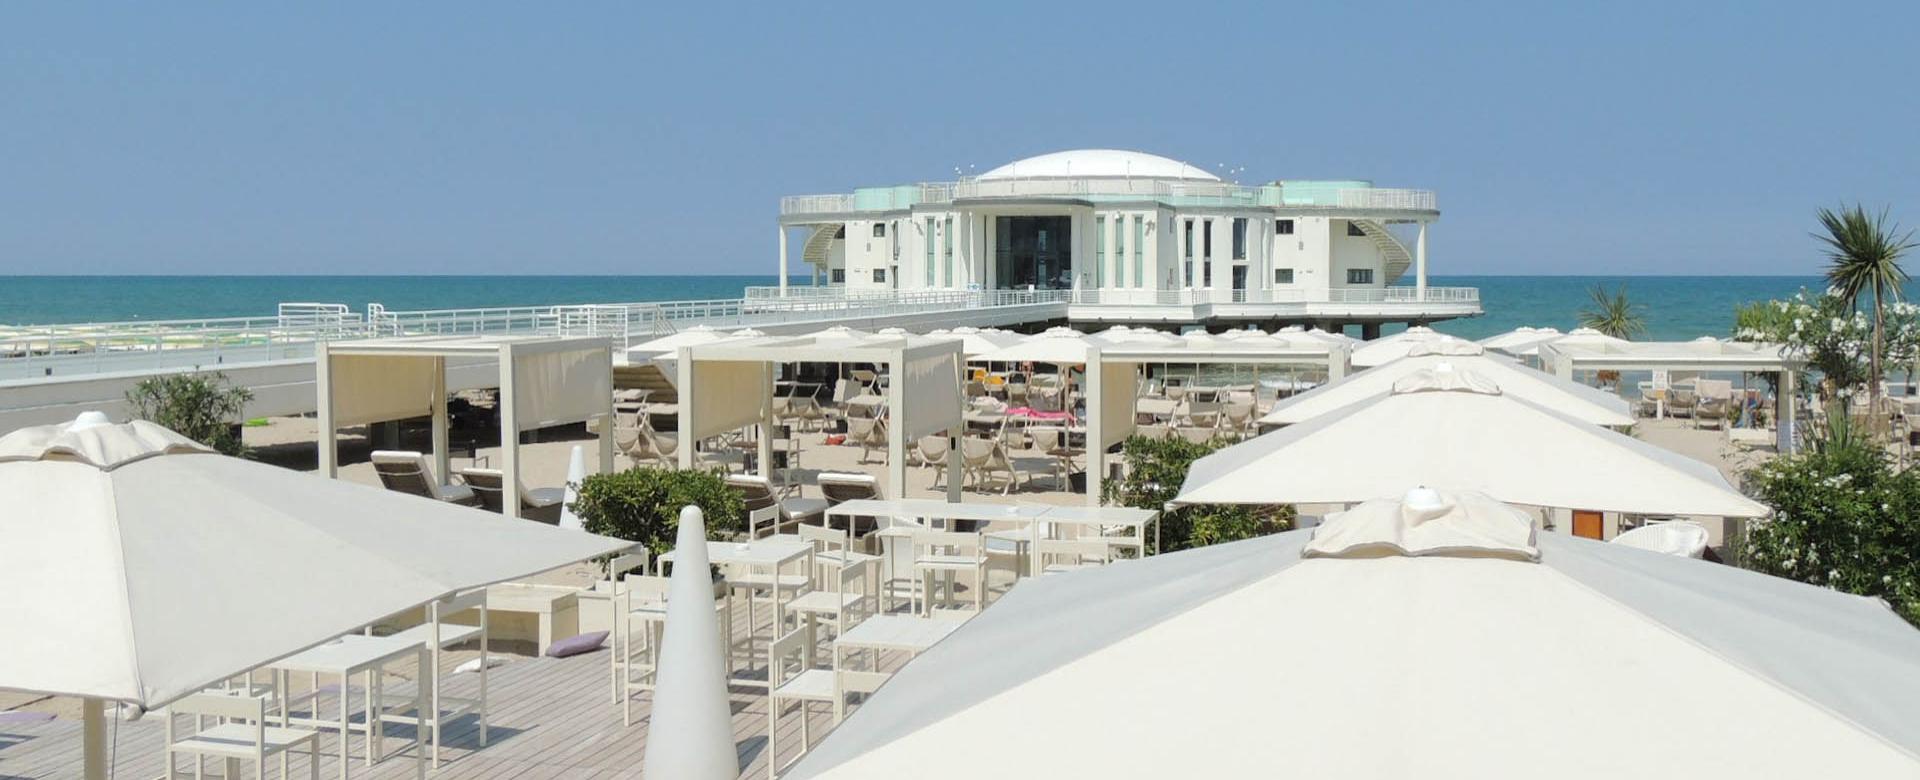 hrsenigallia en hotel-4-stars-senigallia- alighieri-seafront-promenade 003